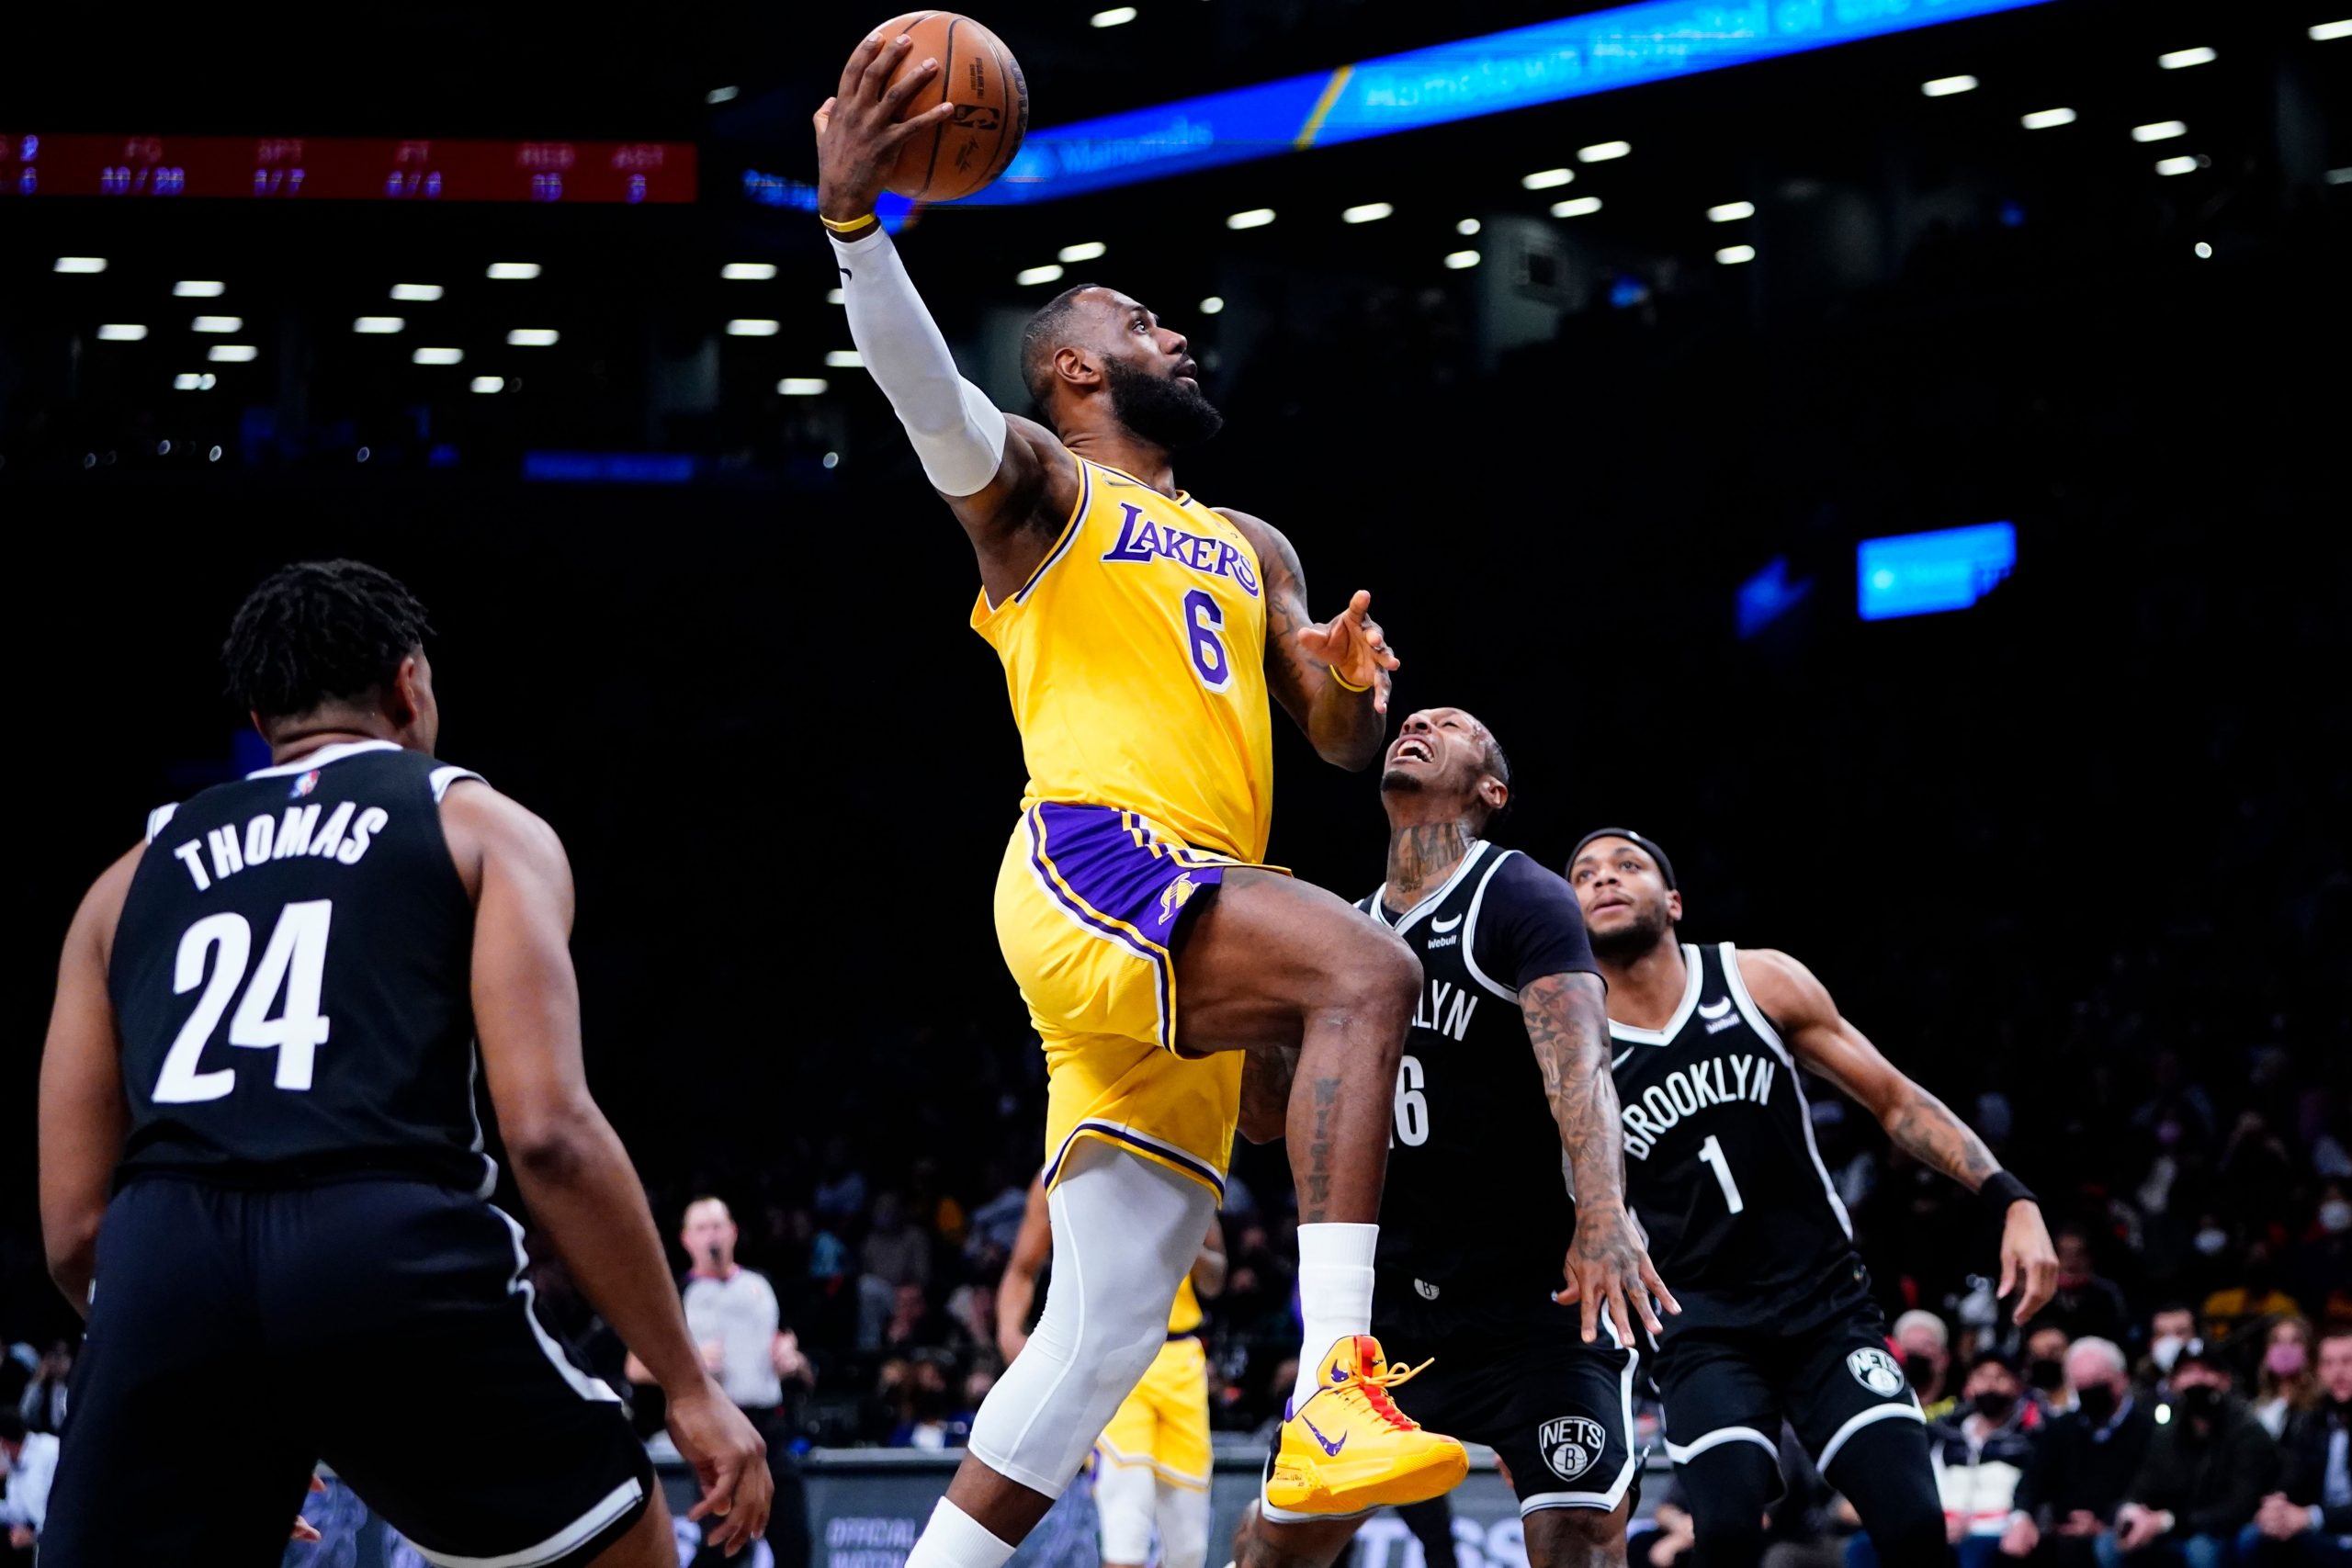 NBA: James has 33, Lakers beat Nets 106-96 in Davis’ return